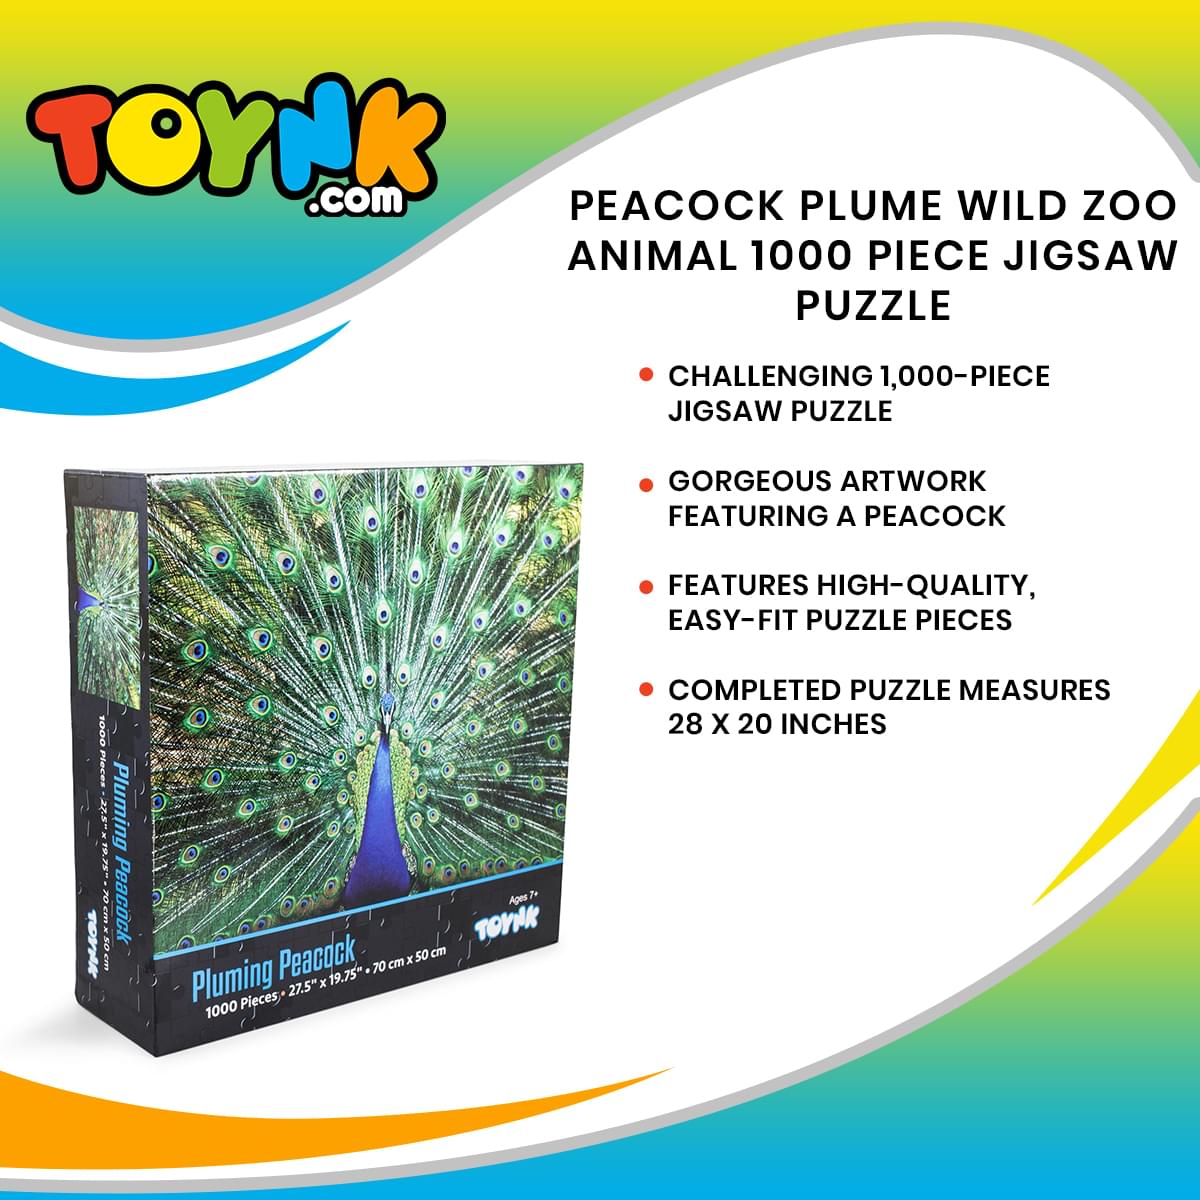 Peacock Plume Wild Zoo Animal 1000 Piece Jigsaw Puzzle